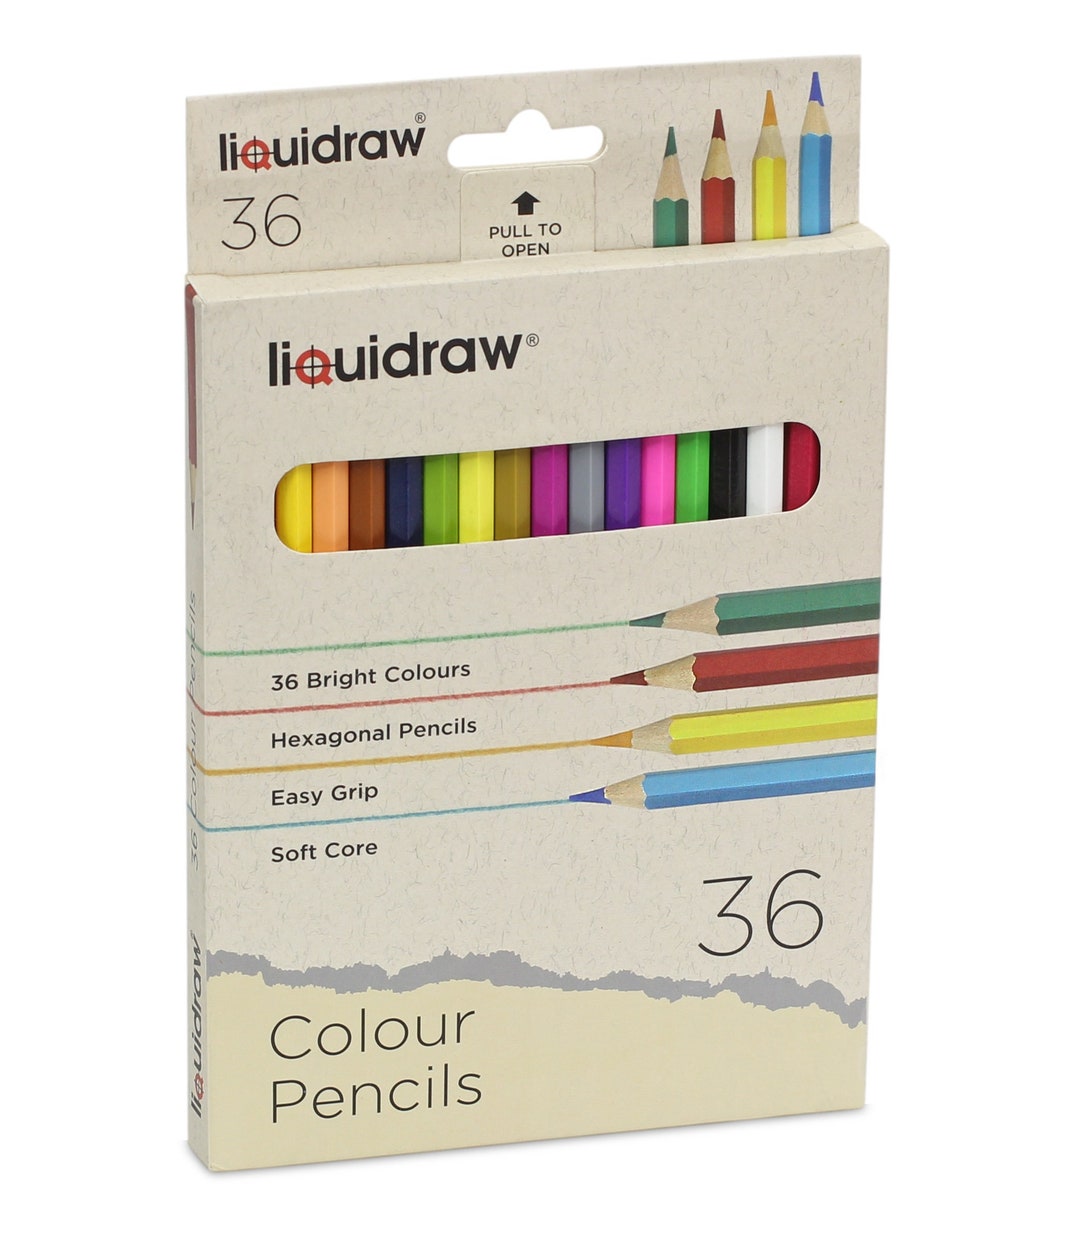 Liquidraw A2 Art Portfolio Case for Artists, 20 Sleeves Inserts